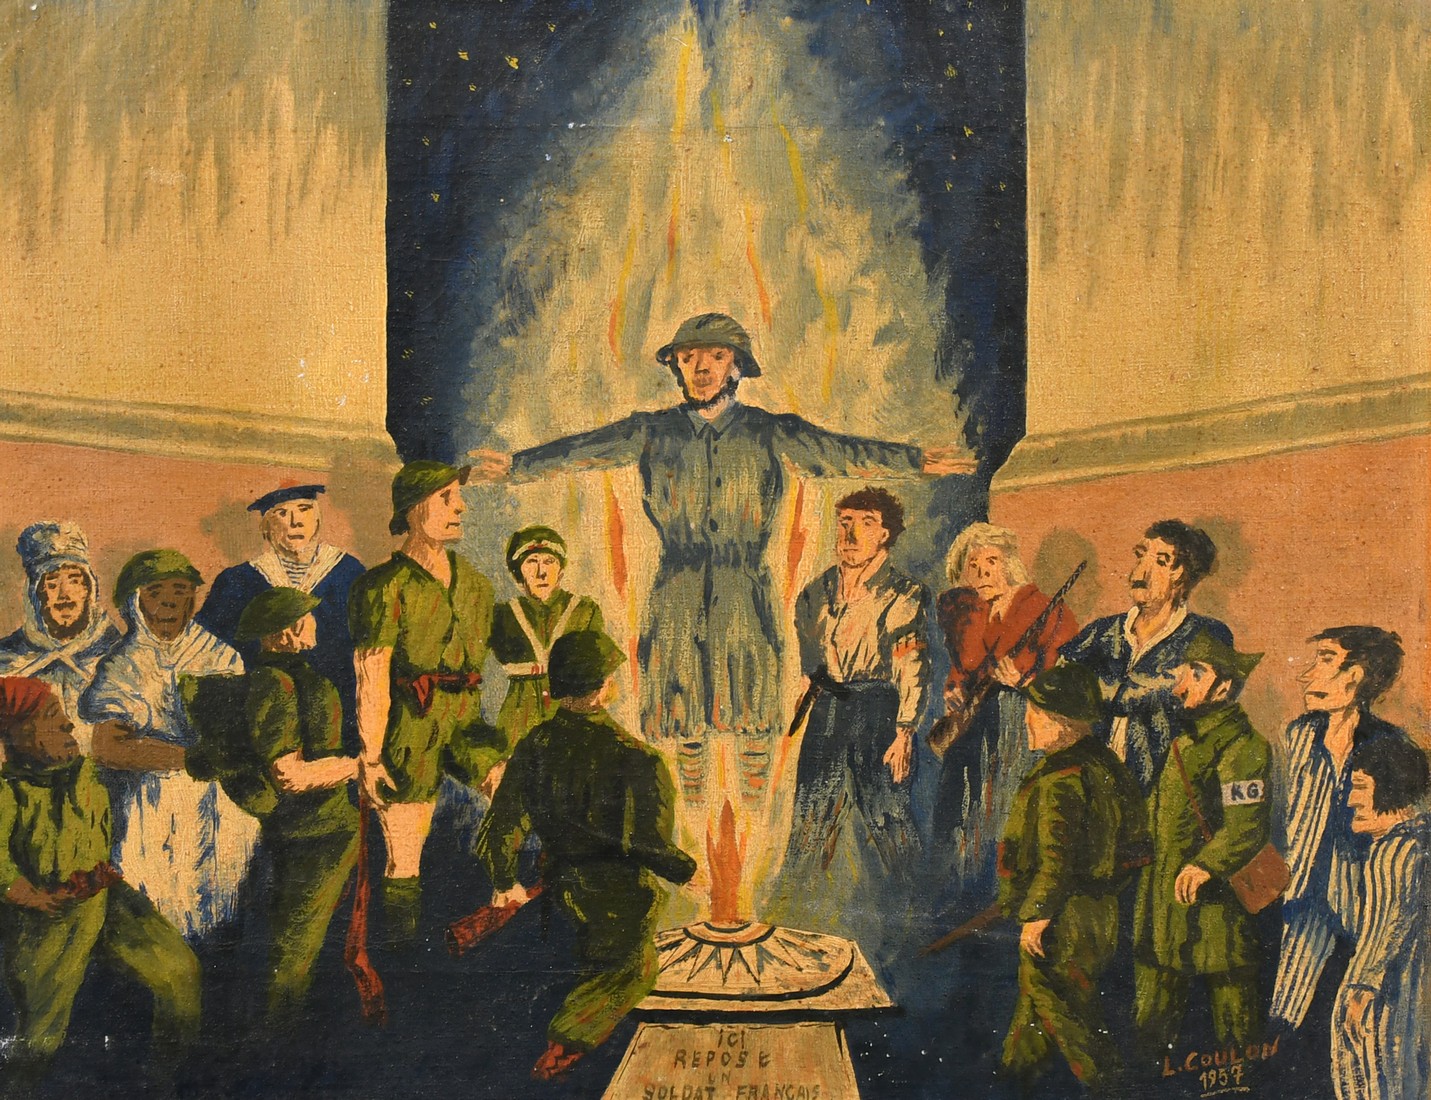 L. Coulon, Circa 1957, 'Ici Repose un Soldat Francais', figures gathered around a memorial, oil on